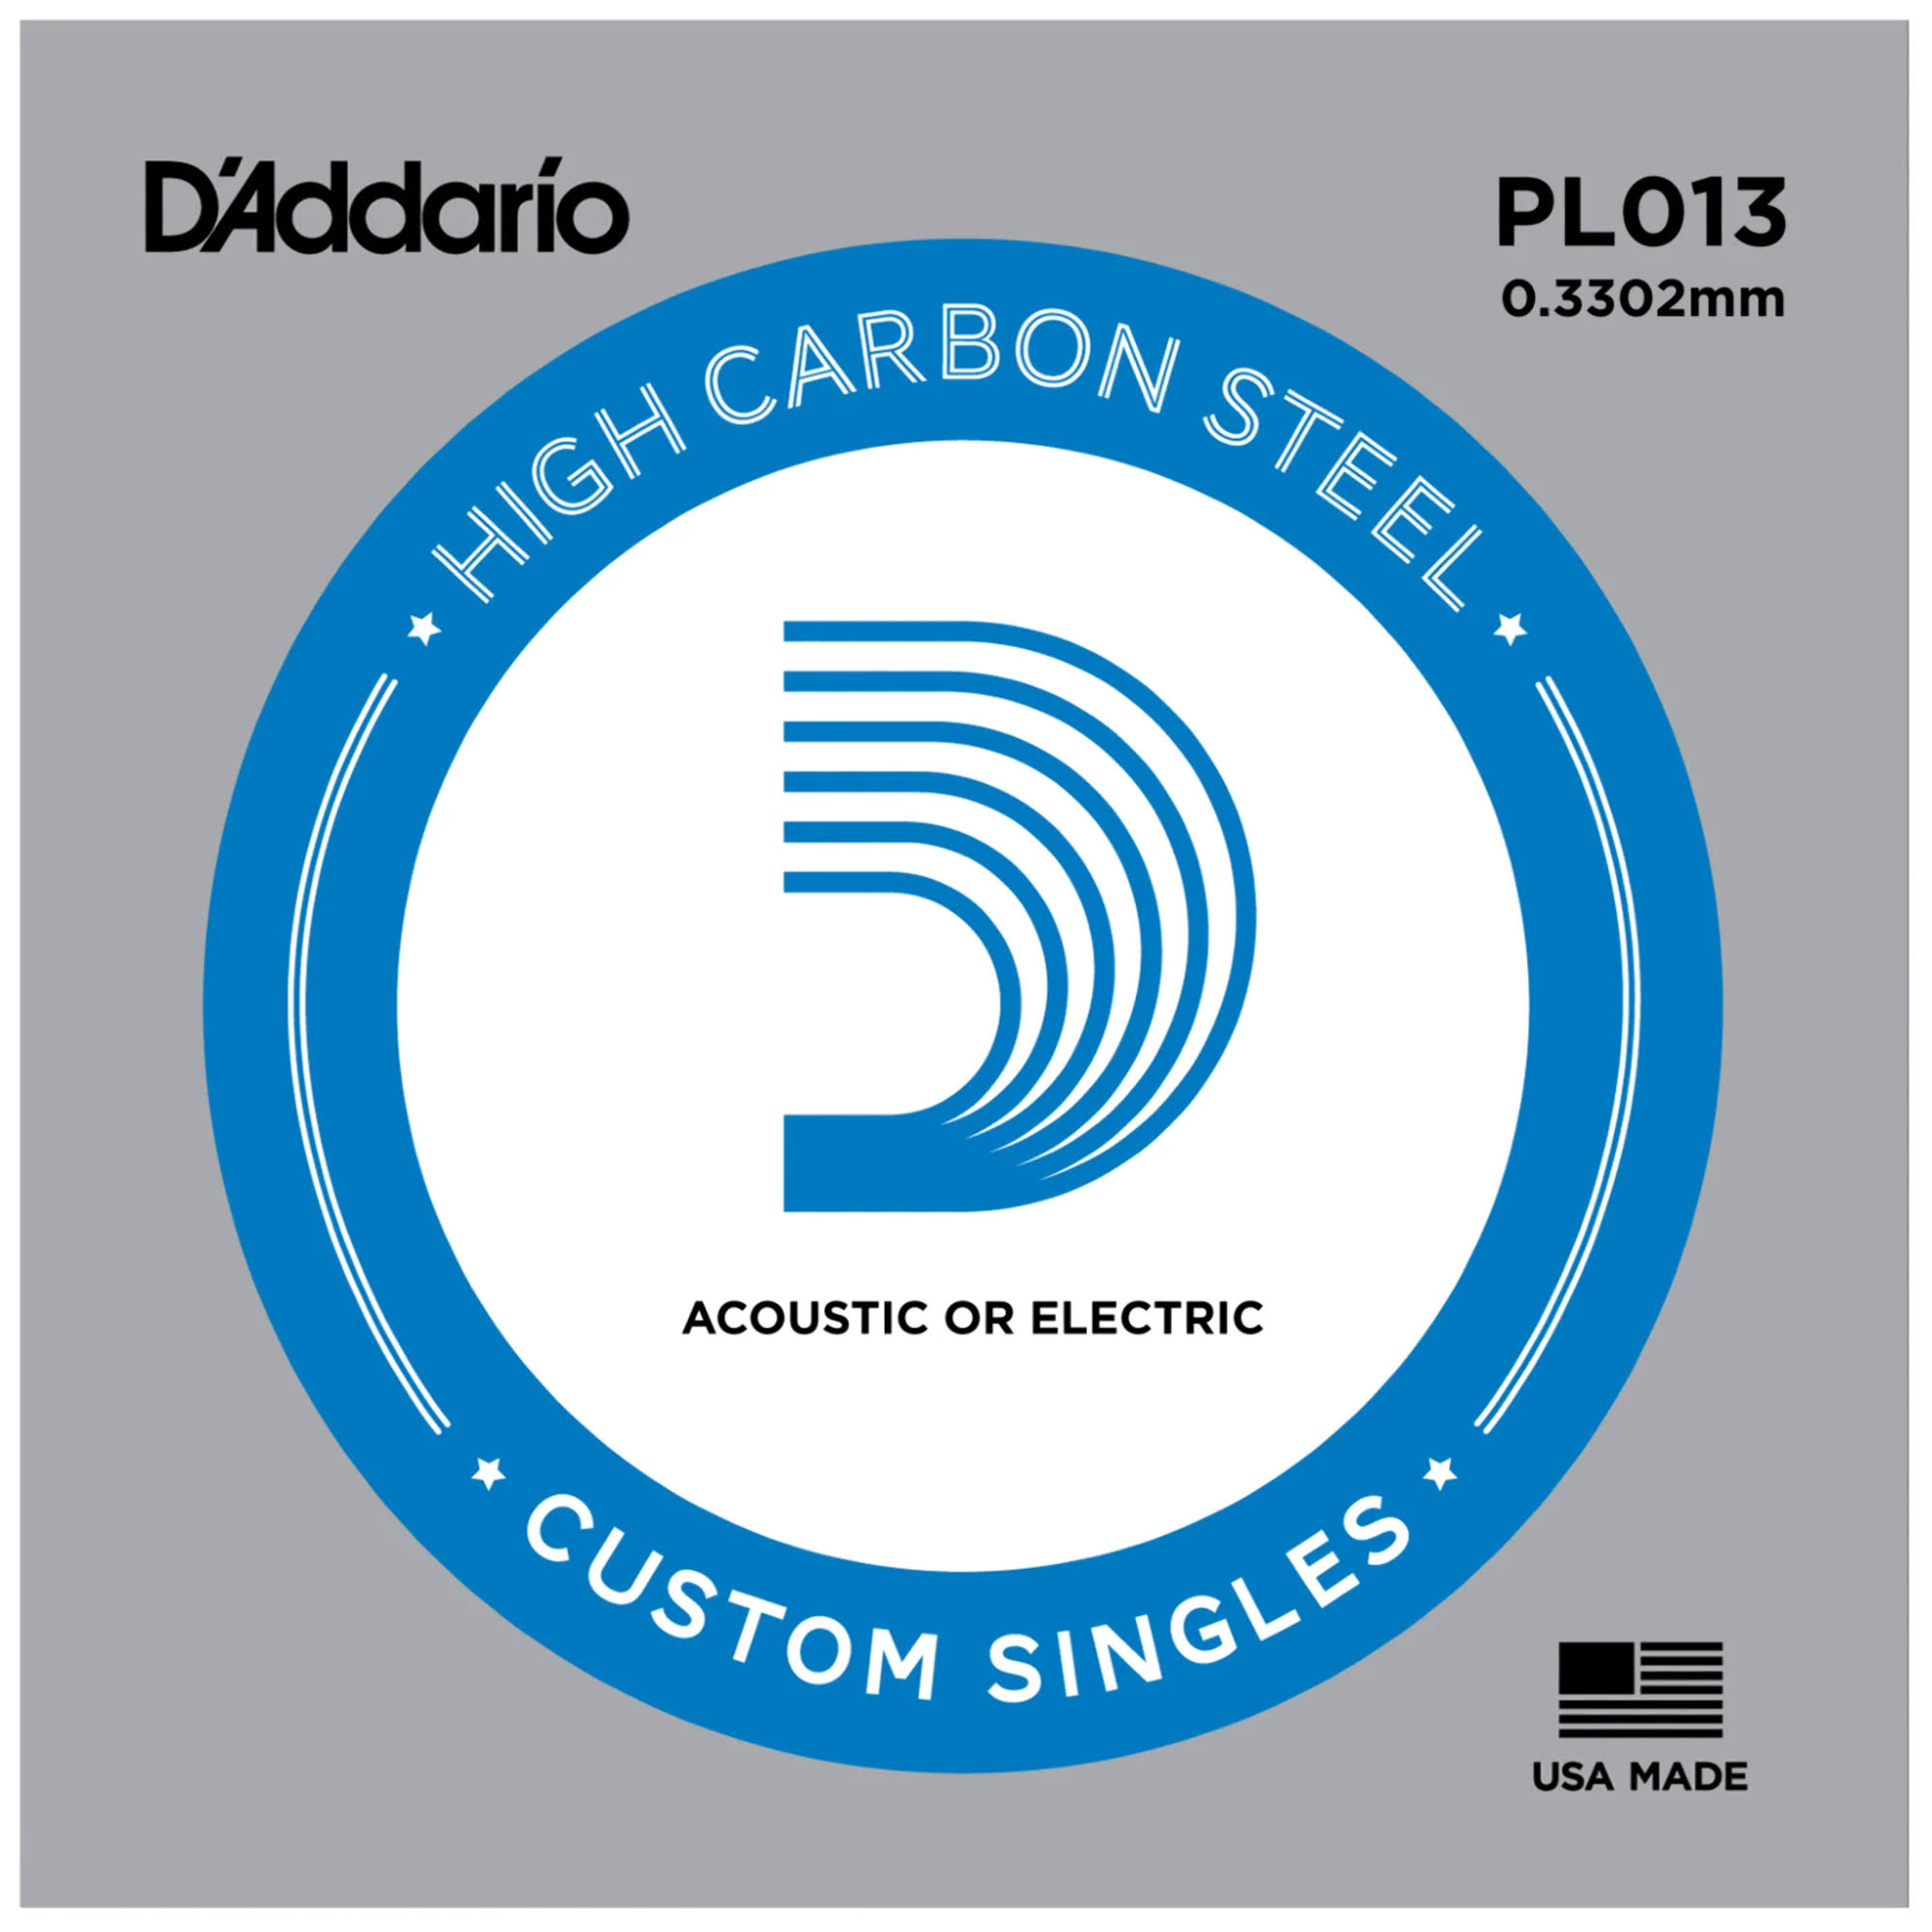 D'Addario PL013 Plain Steel Guitar String - Acoustic & Electric